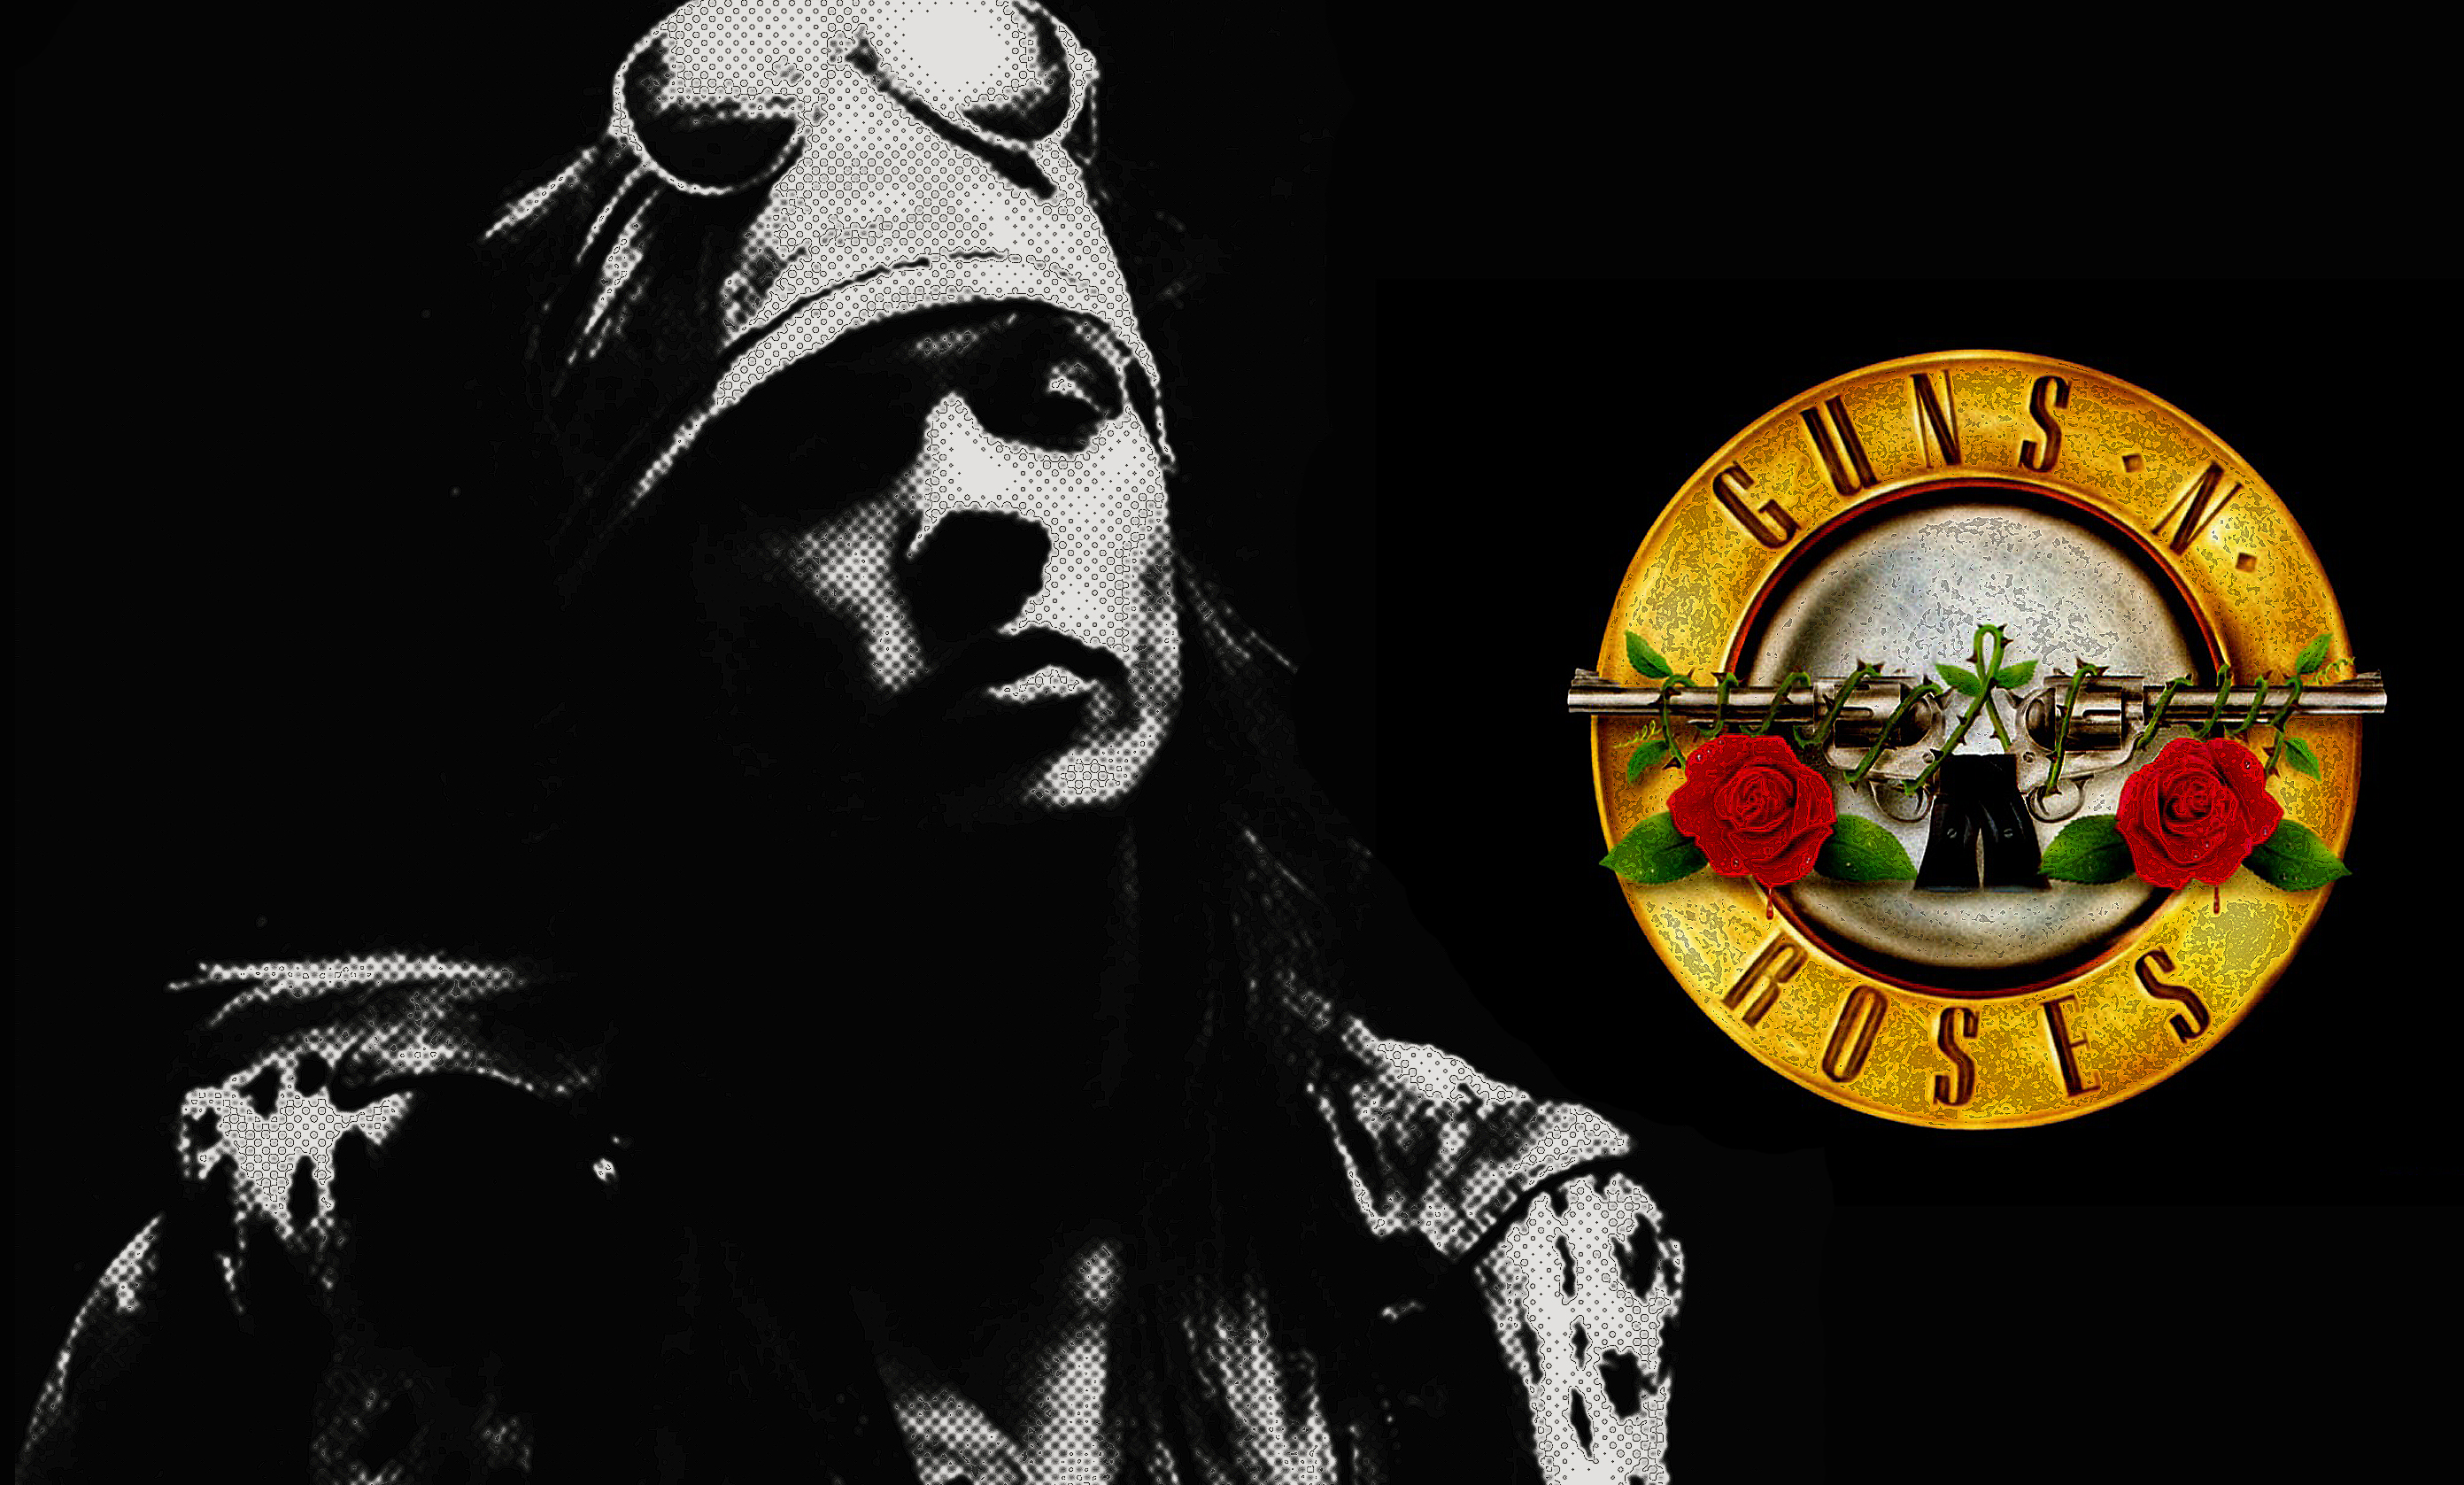 Music Guns N' Roses HD Wallpaper | Background Image